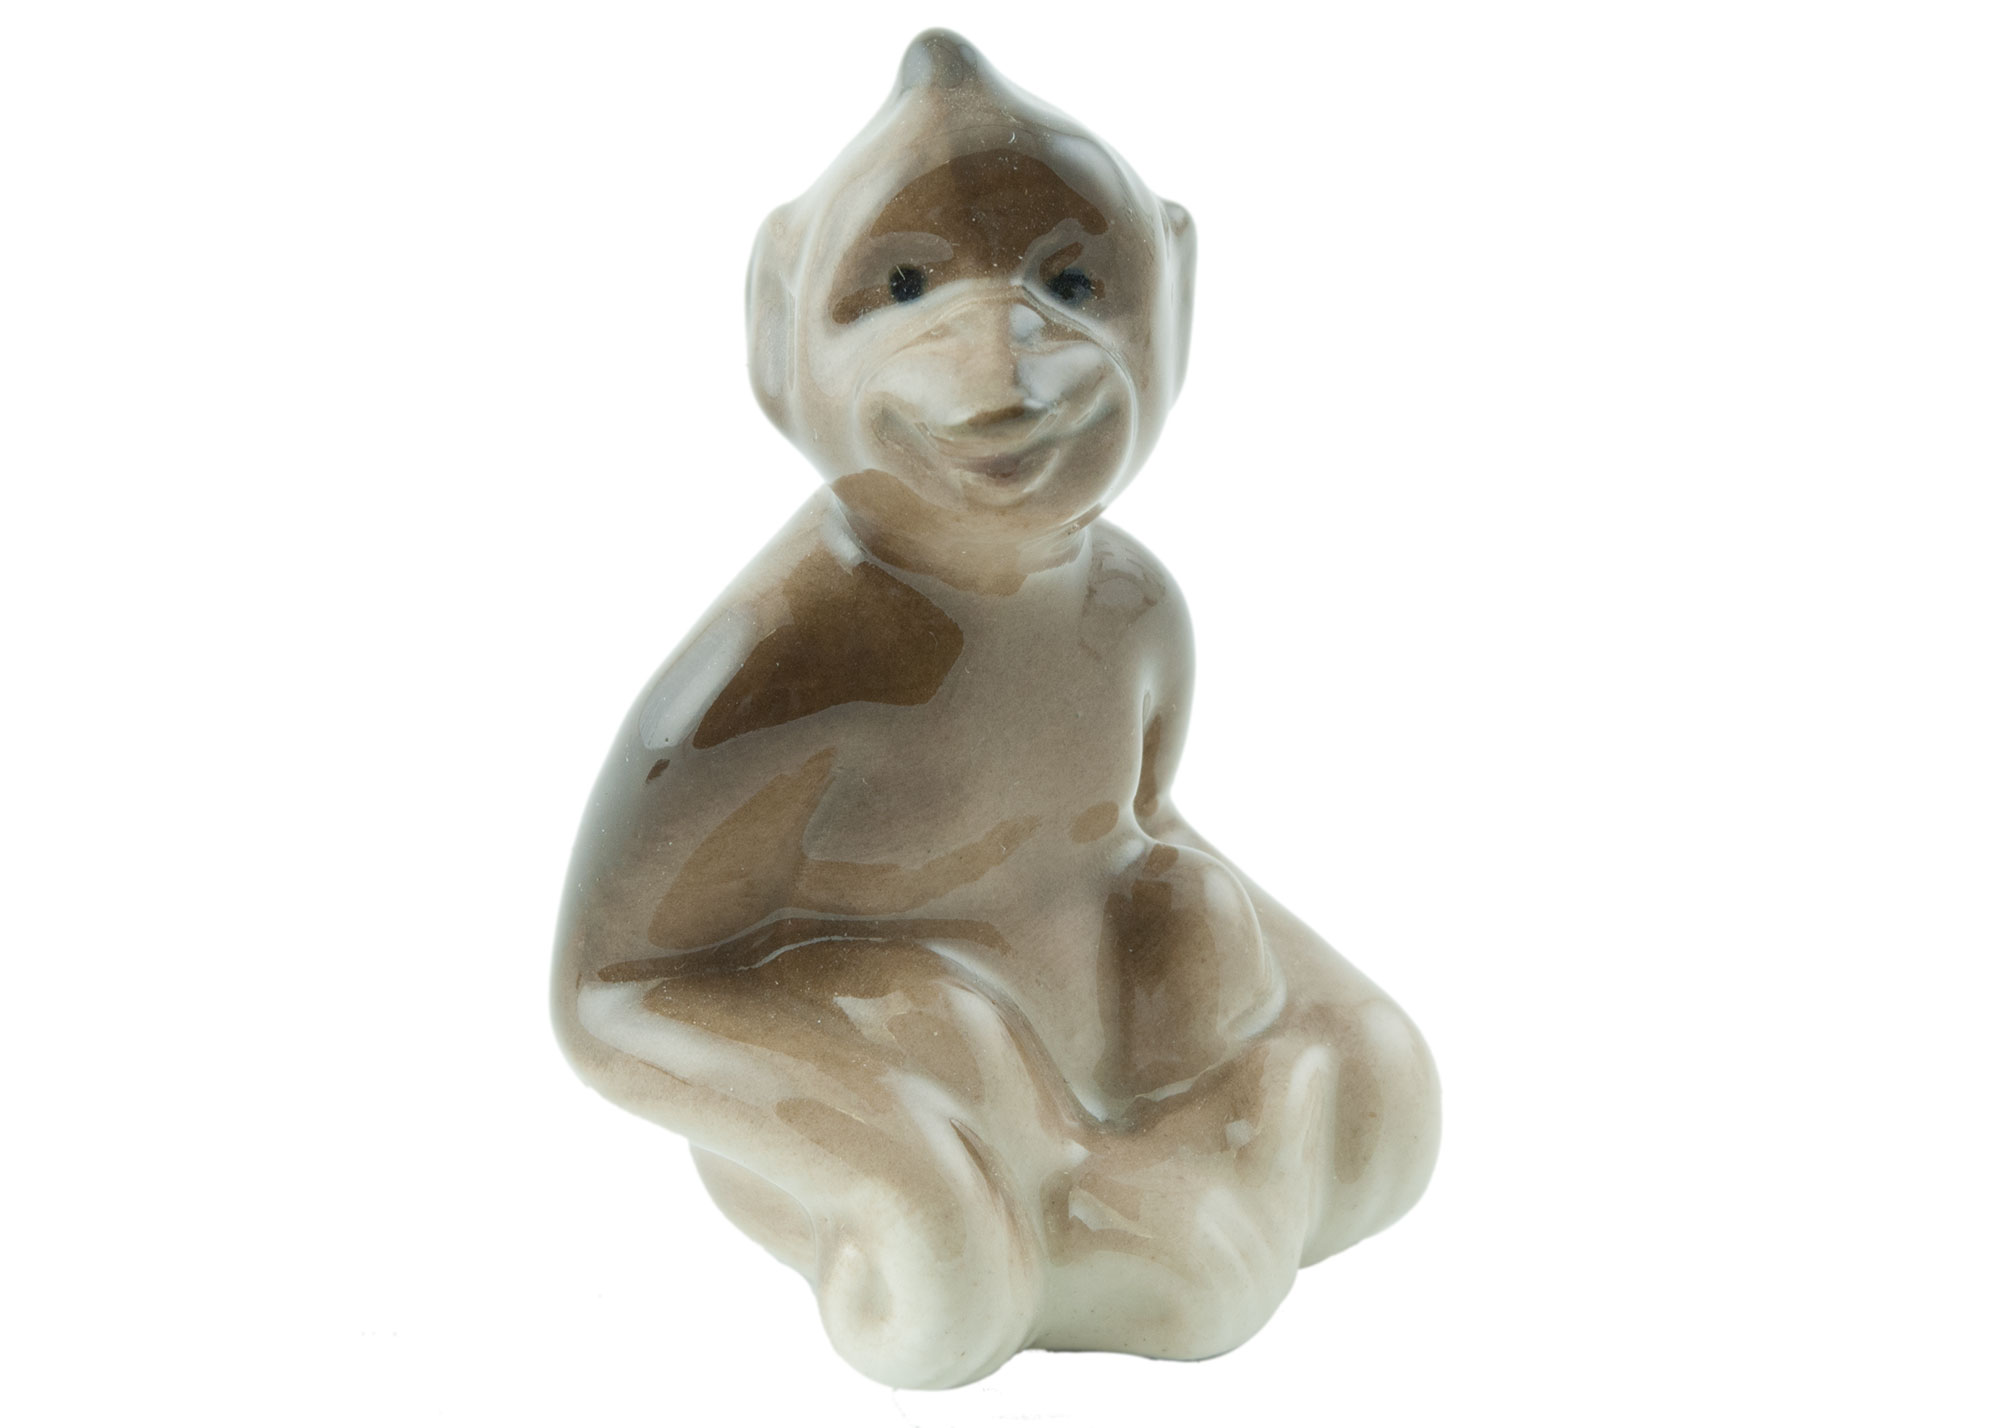 Buy Monkey Porcelain Figurine 2" at GoldenCockerel.com